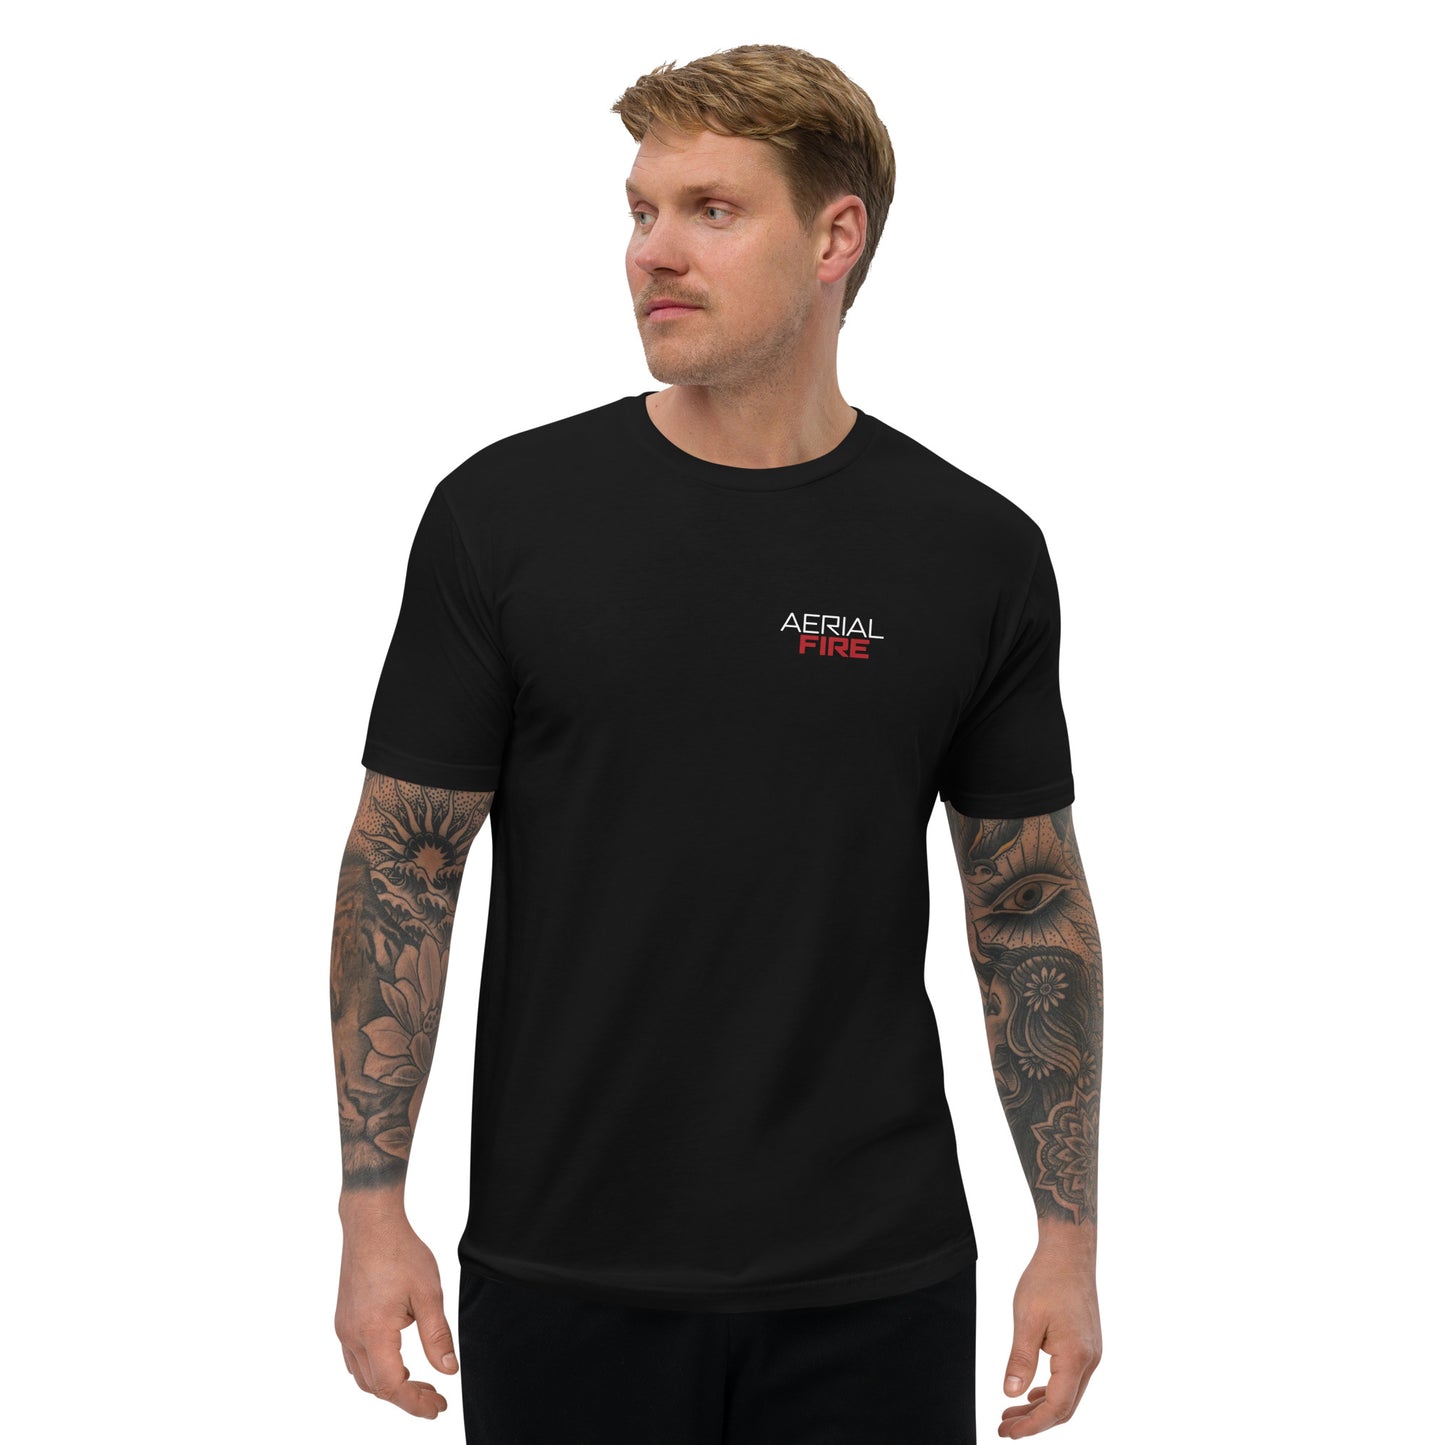 AerialFire Q400AT T-shirt